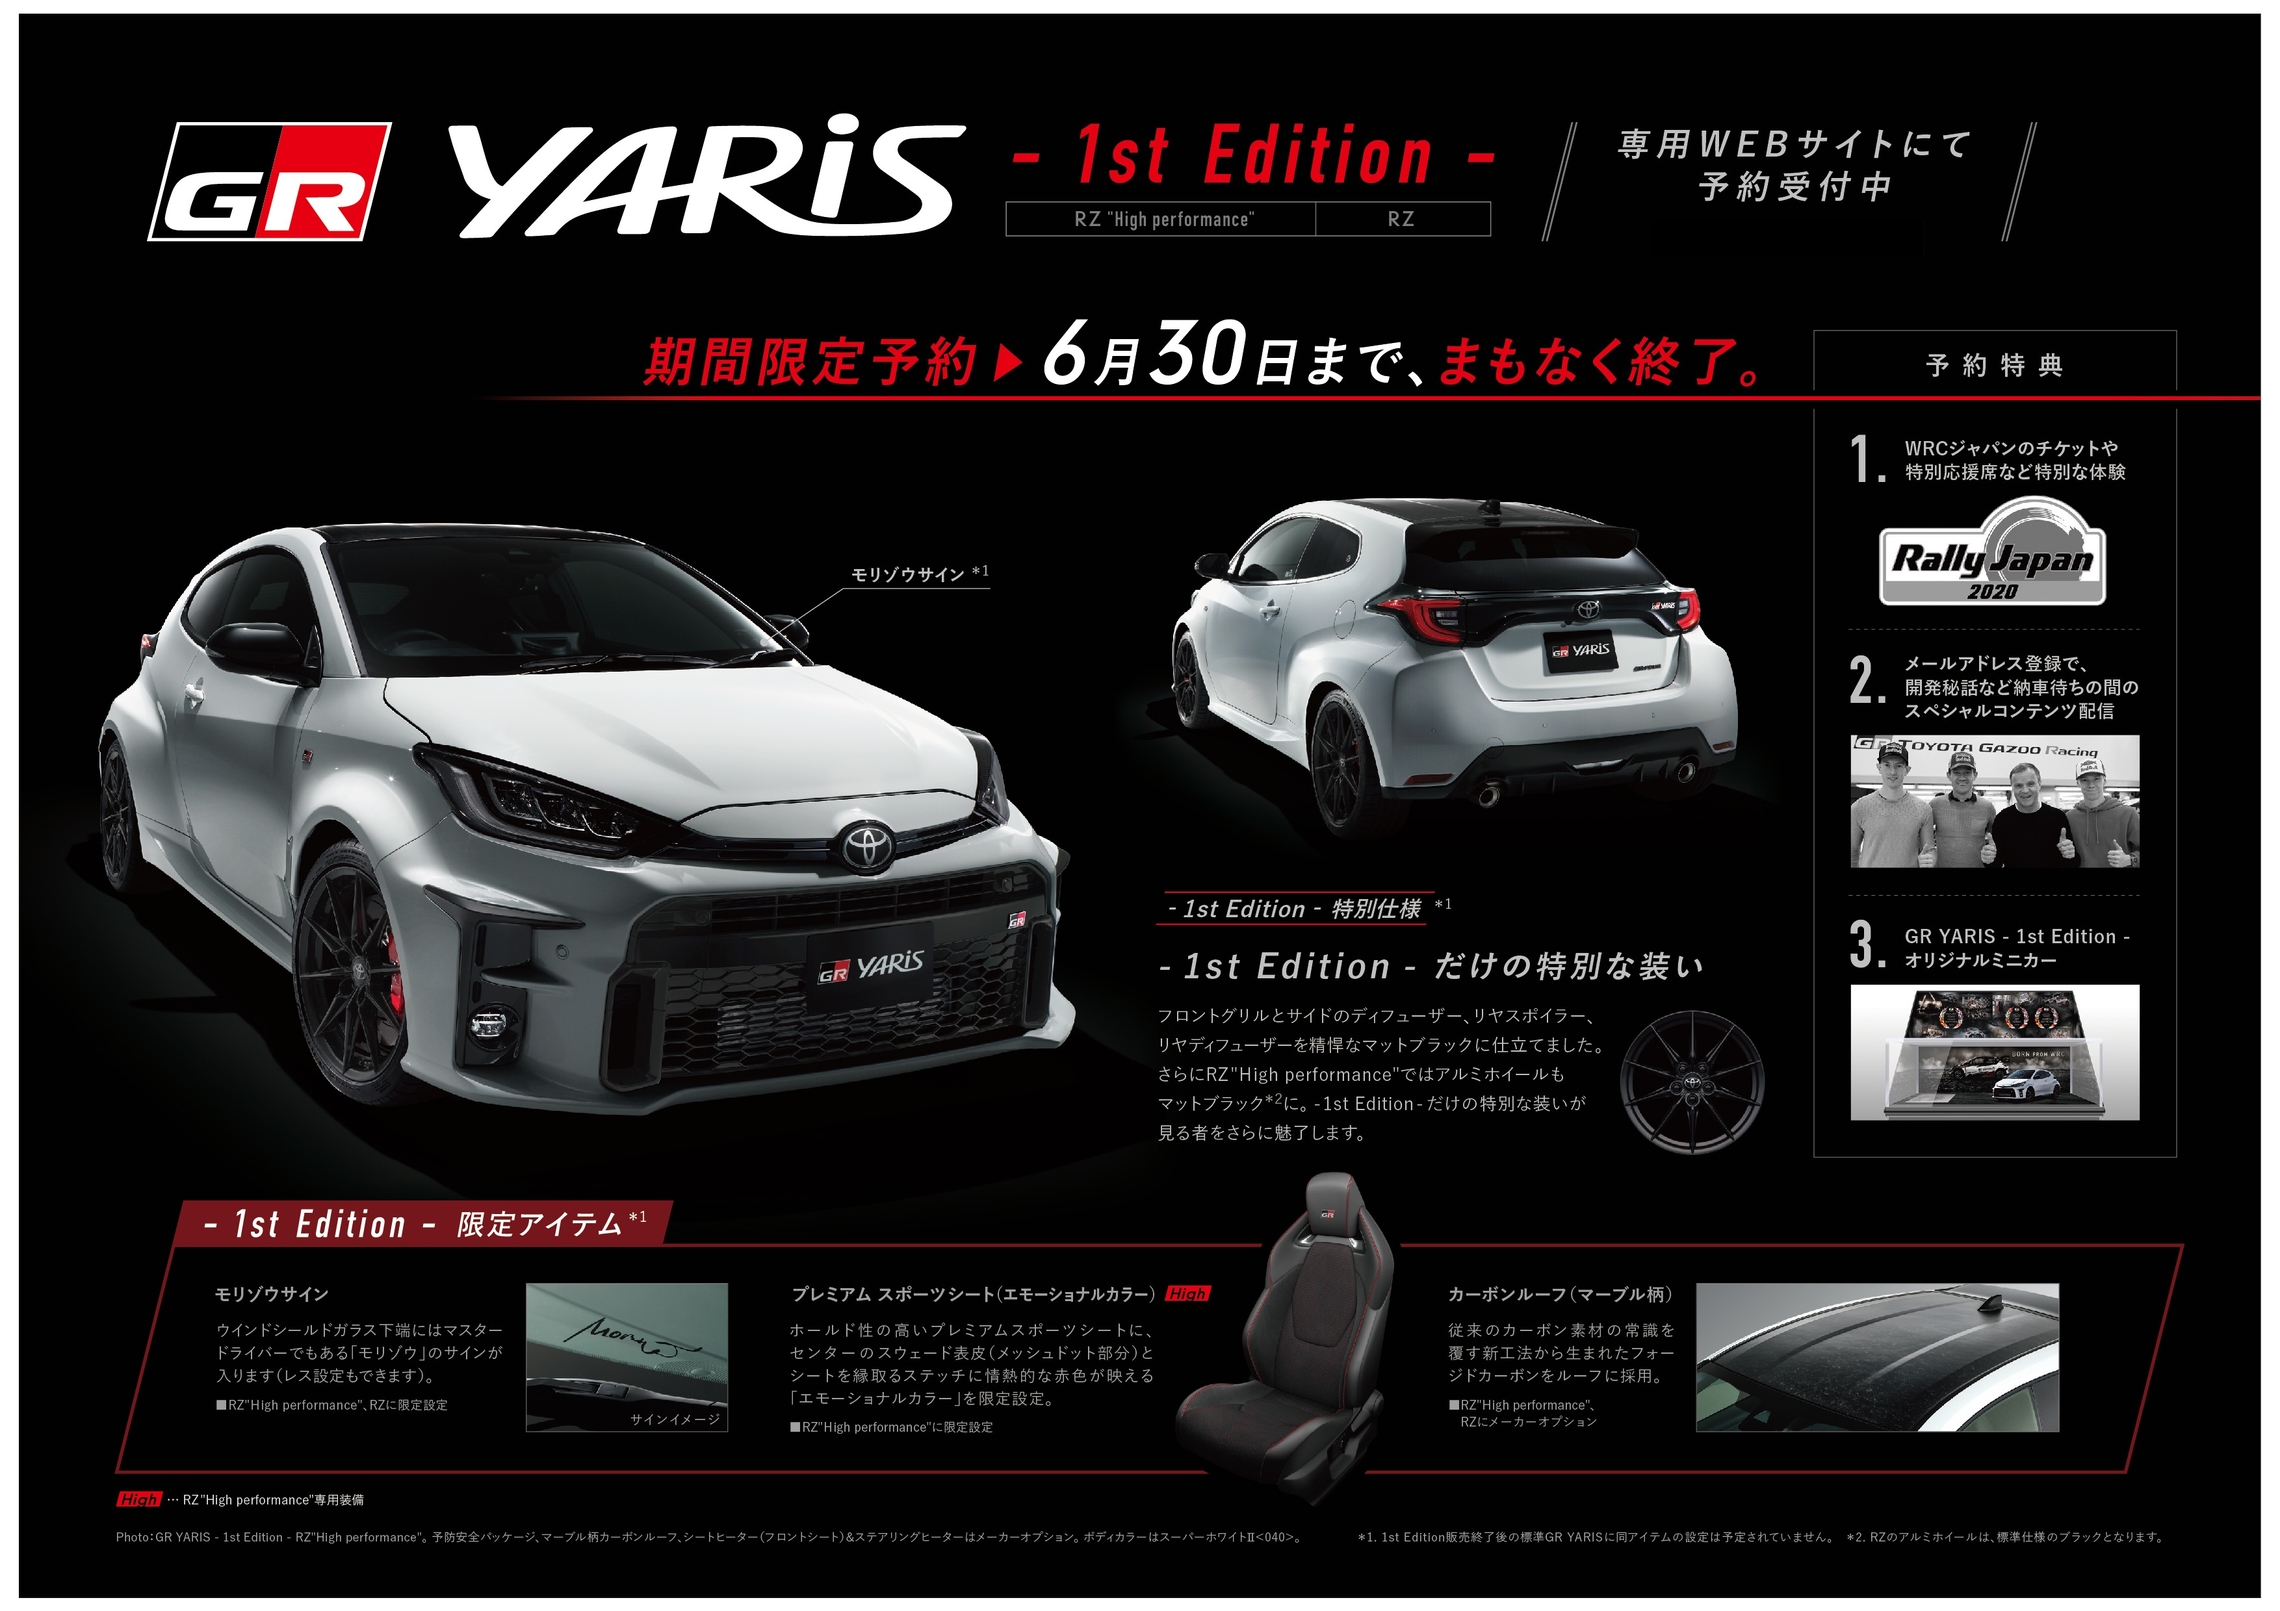 GRヤリス 1stエディション 先行予約購入特典 ミニカー VRゴーグル www